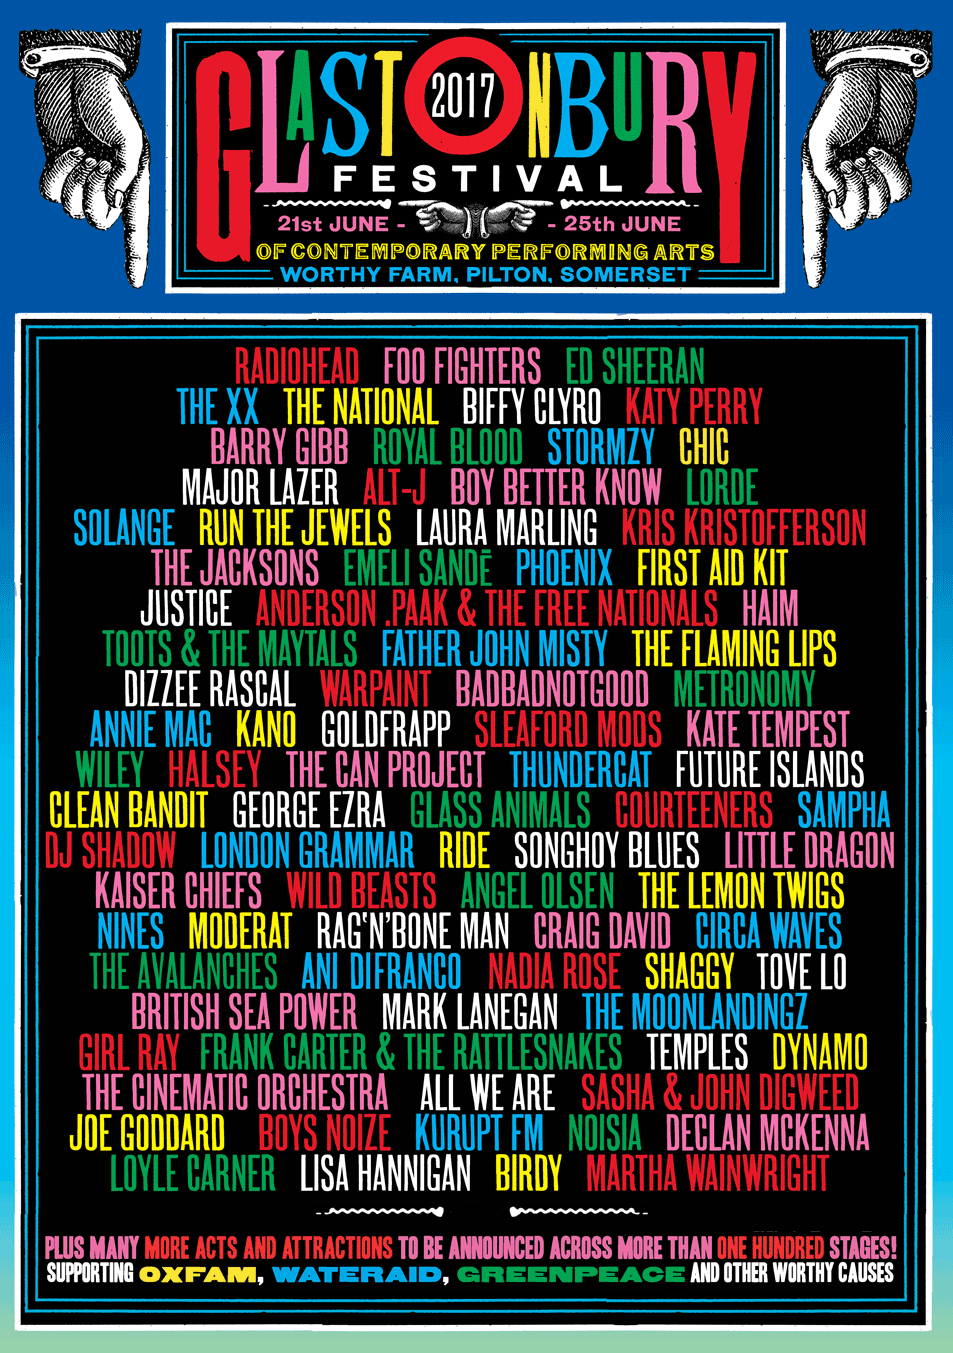 Full Glastonbury Festival Line Up and Set Times Announced. mxdwn.co.uk